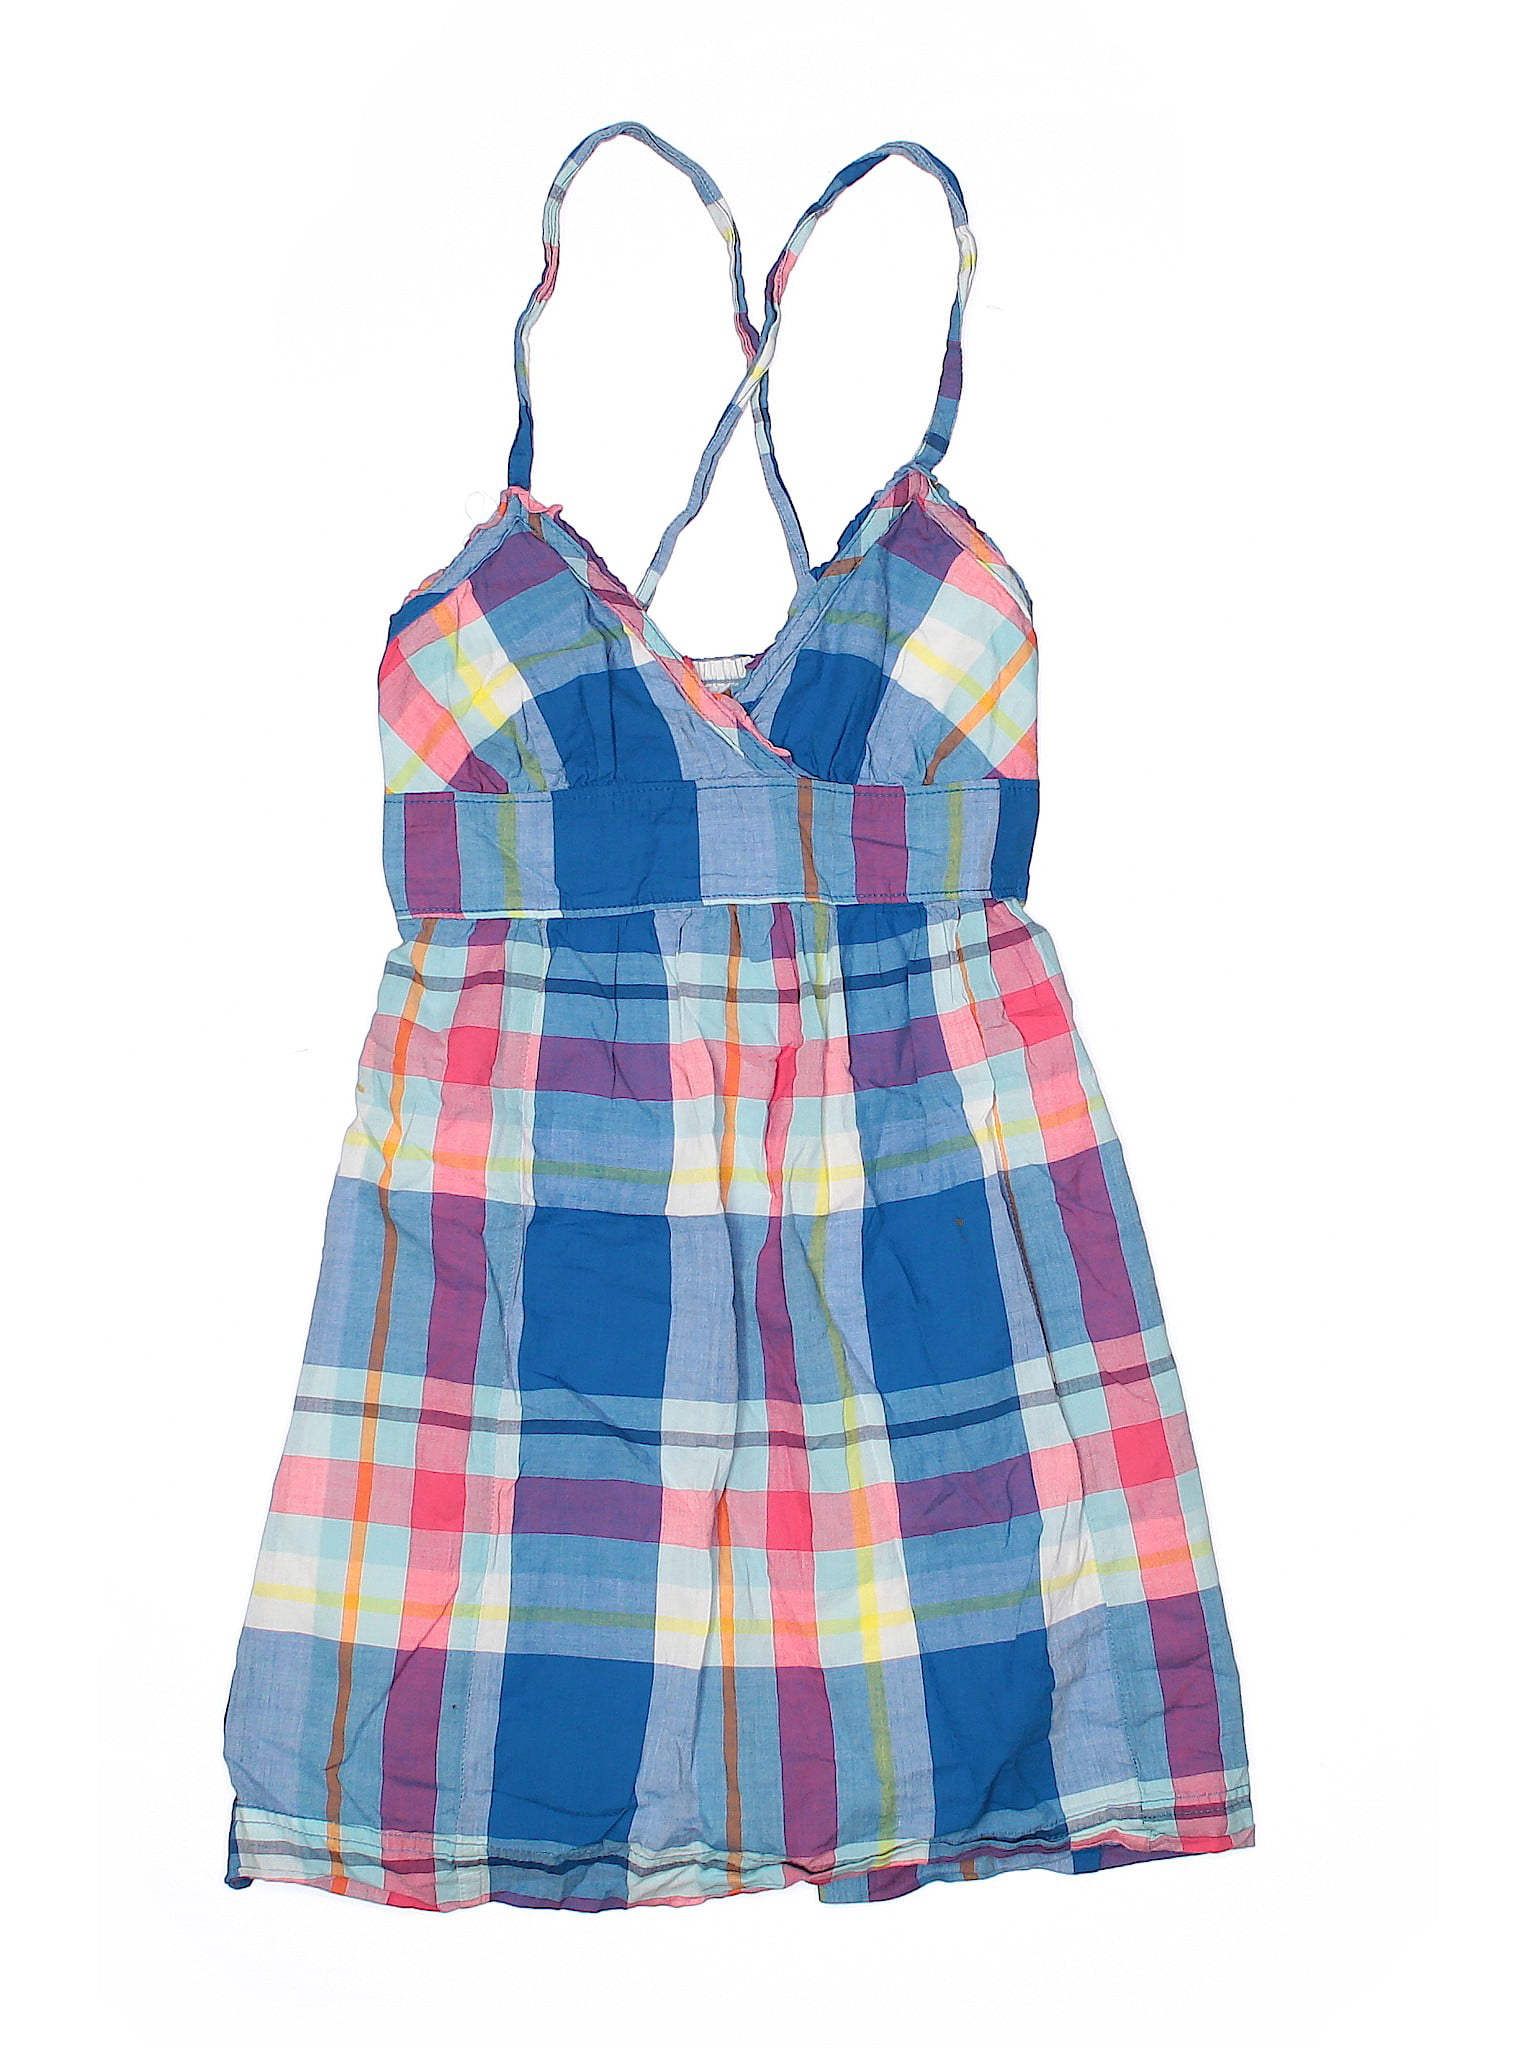 Abercrombie - Pre-Owned Abercrombie Girl's Size M Kids Dress - Walmart ...